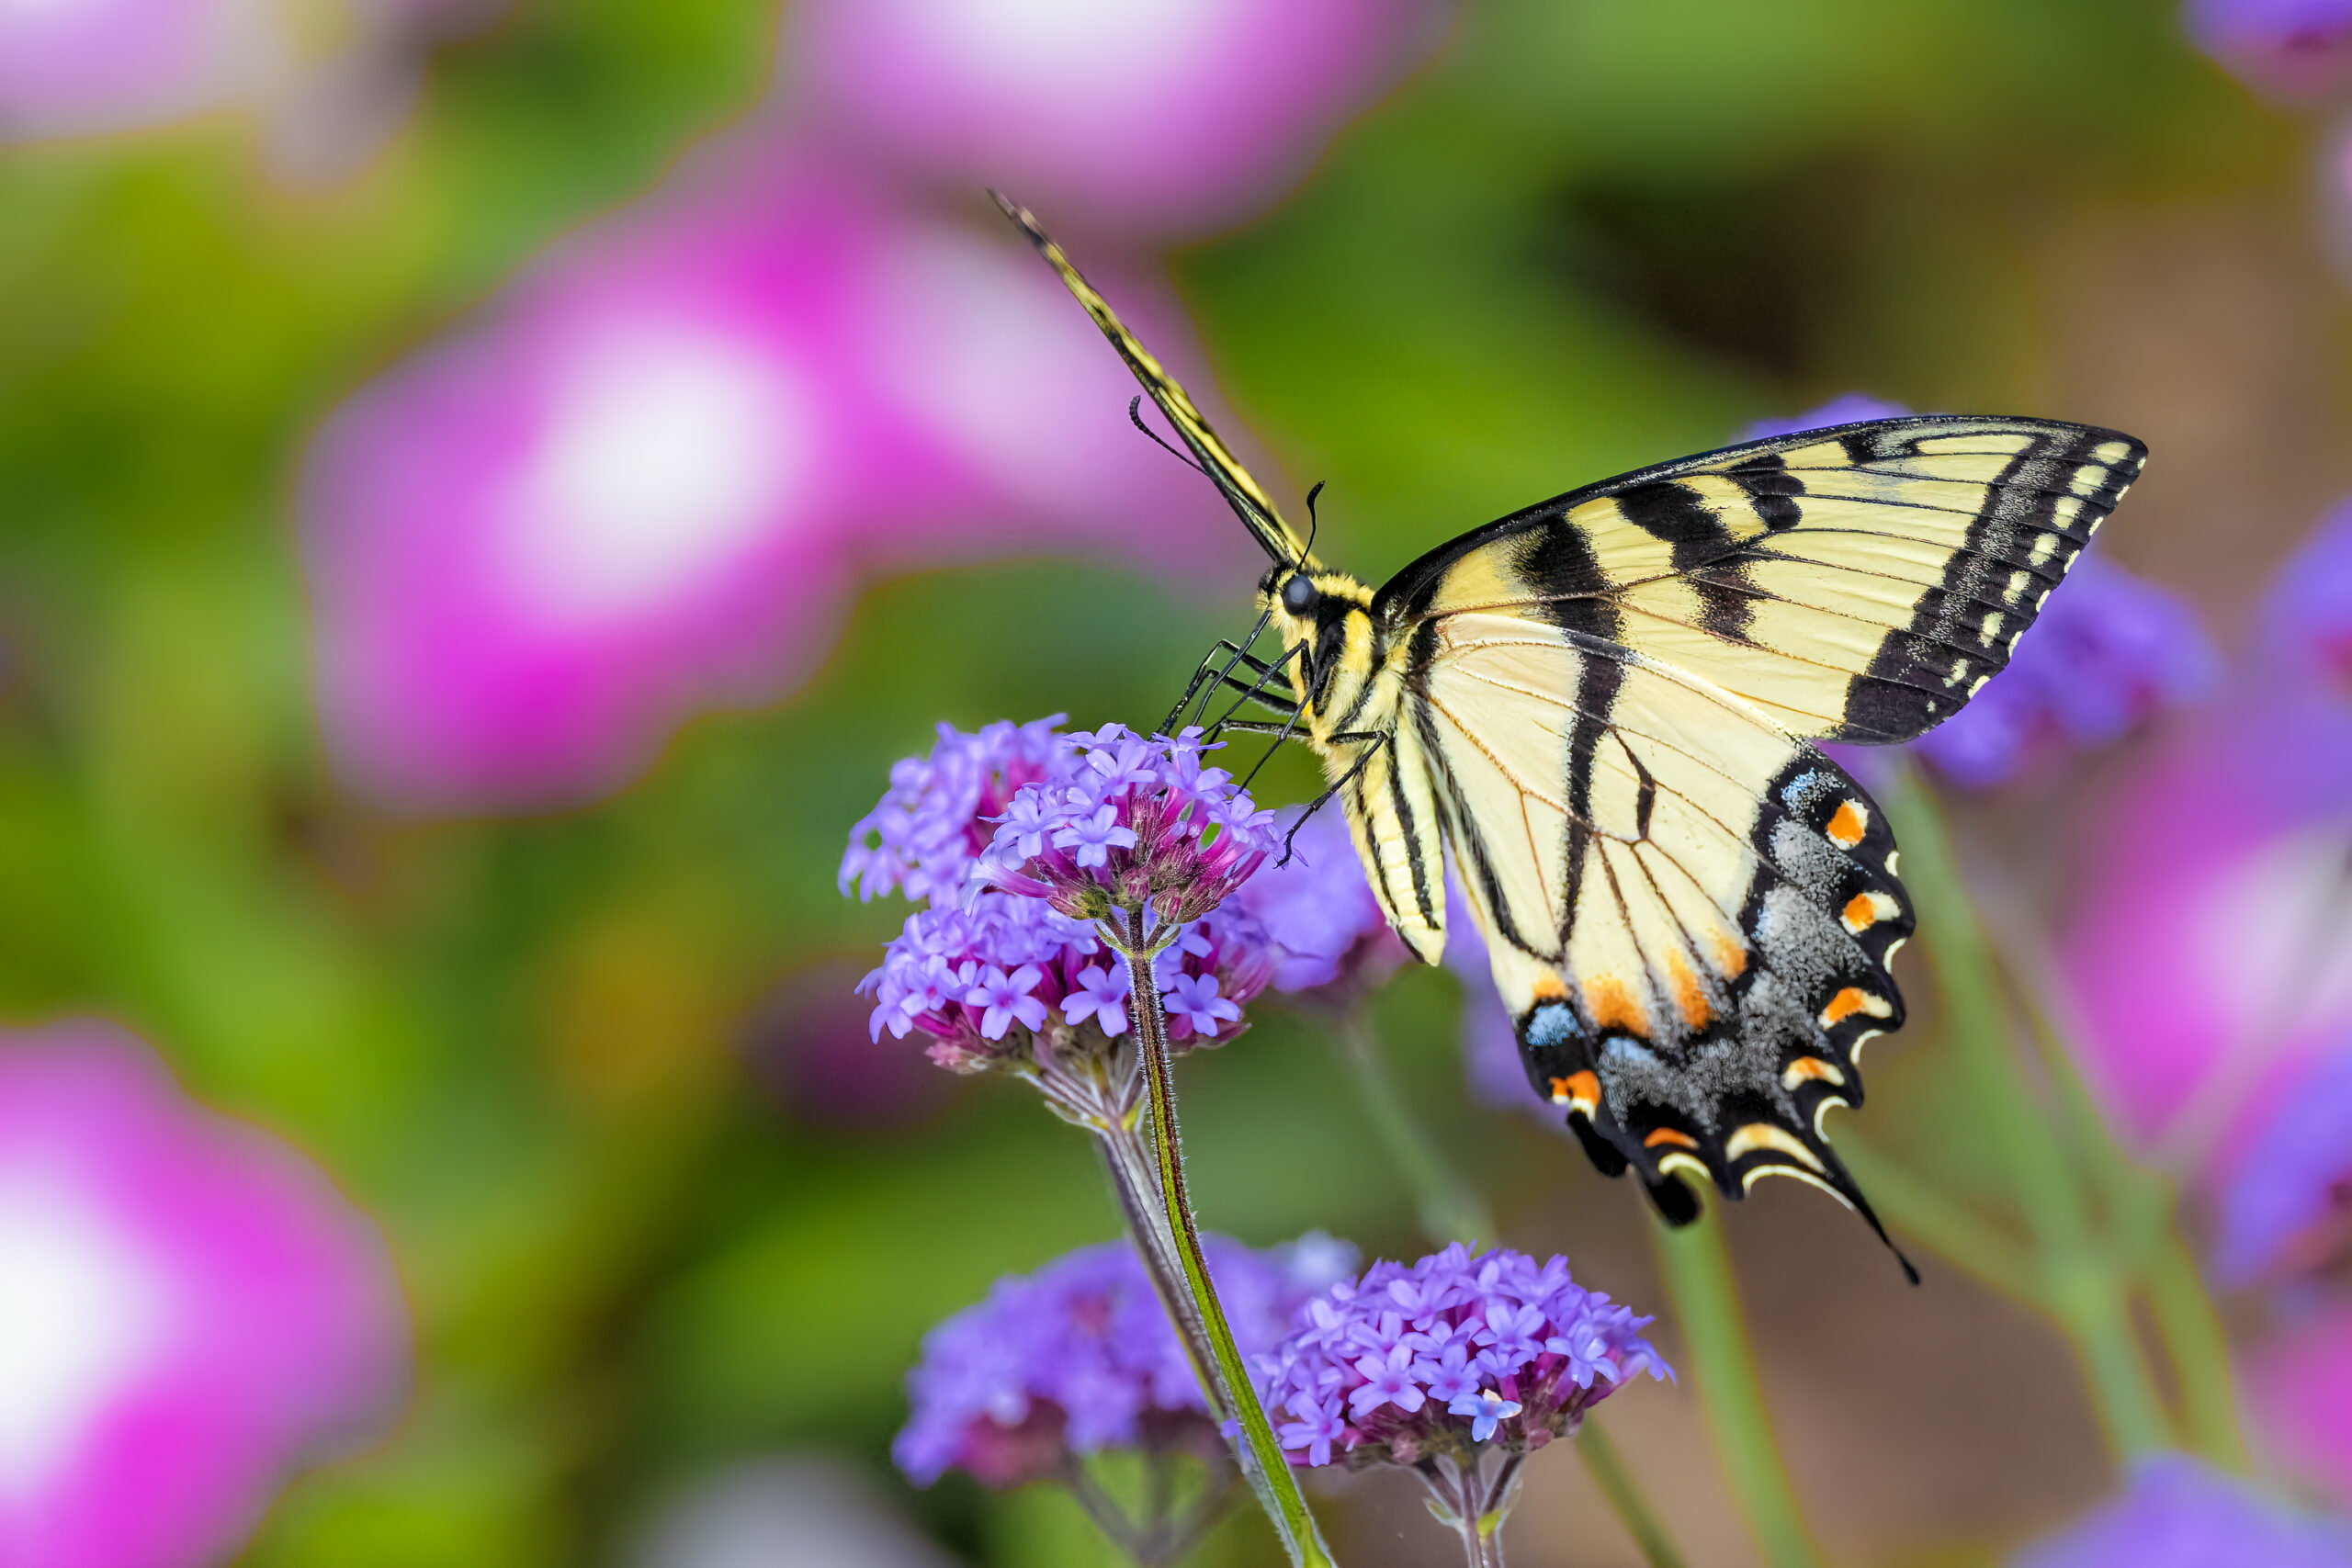 Eastern Tiger Swallowtail Butterfly on a flower